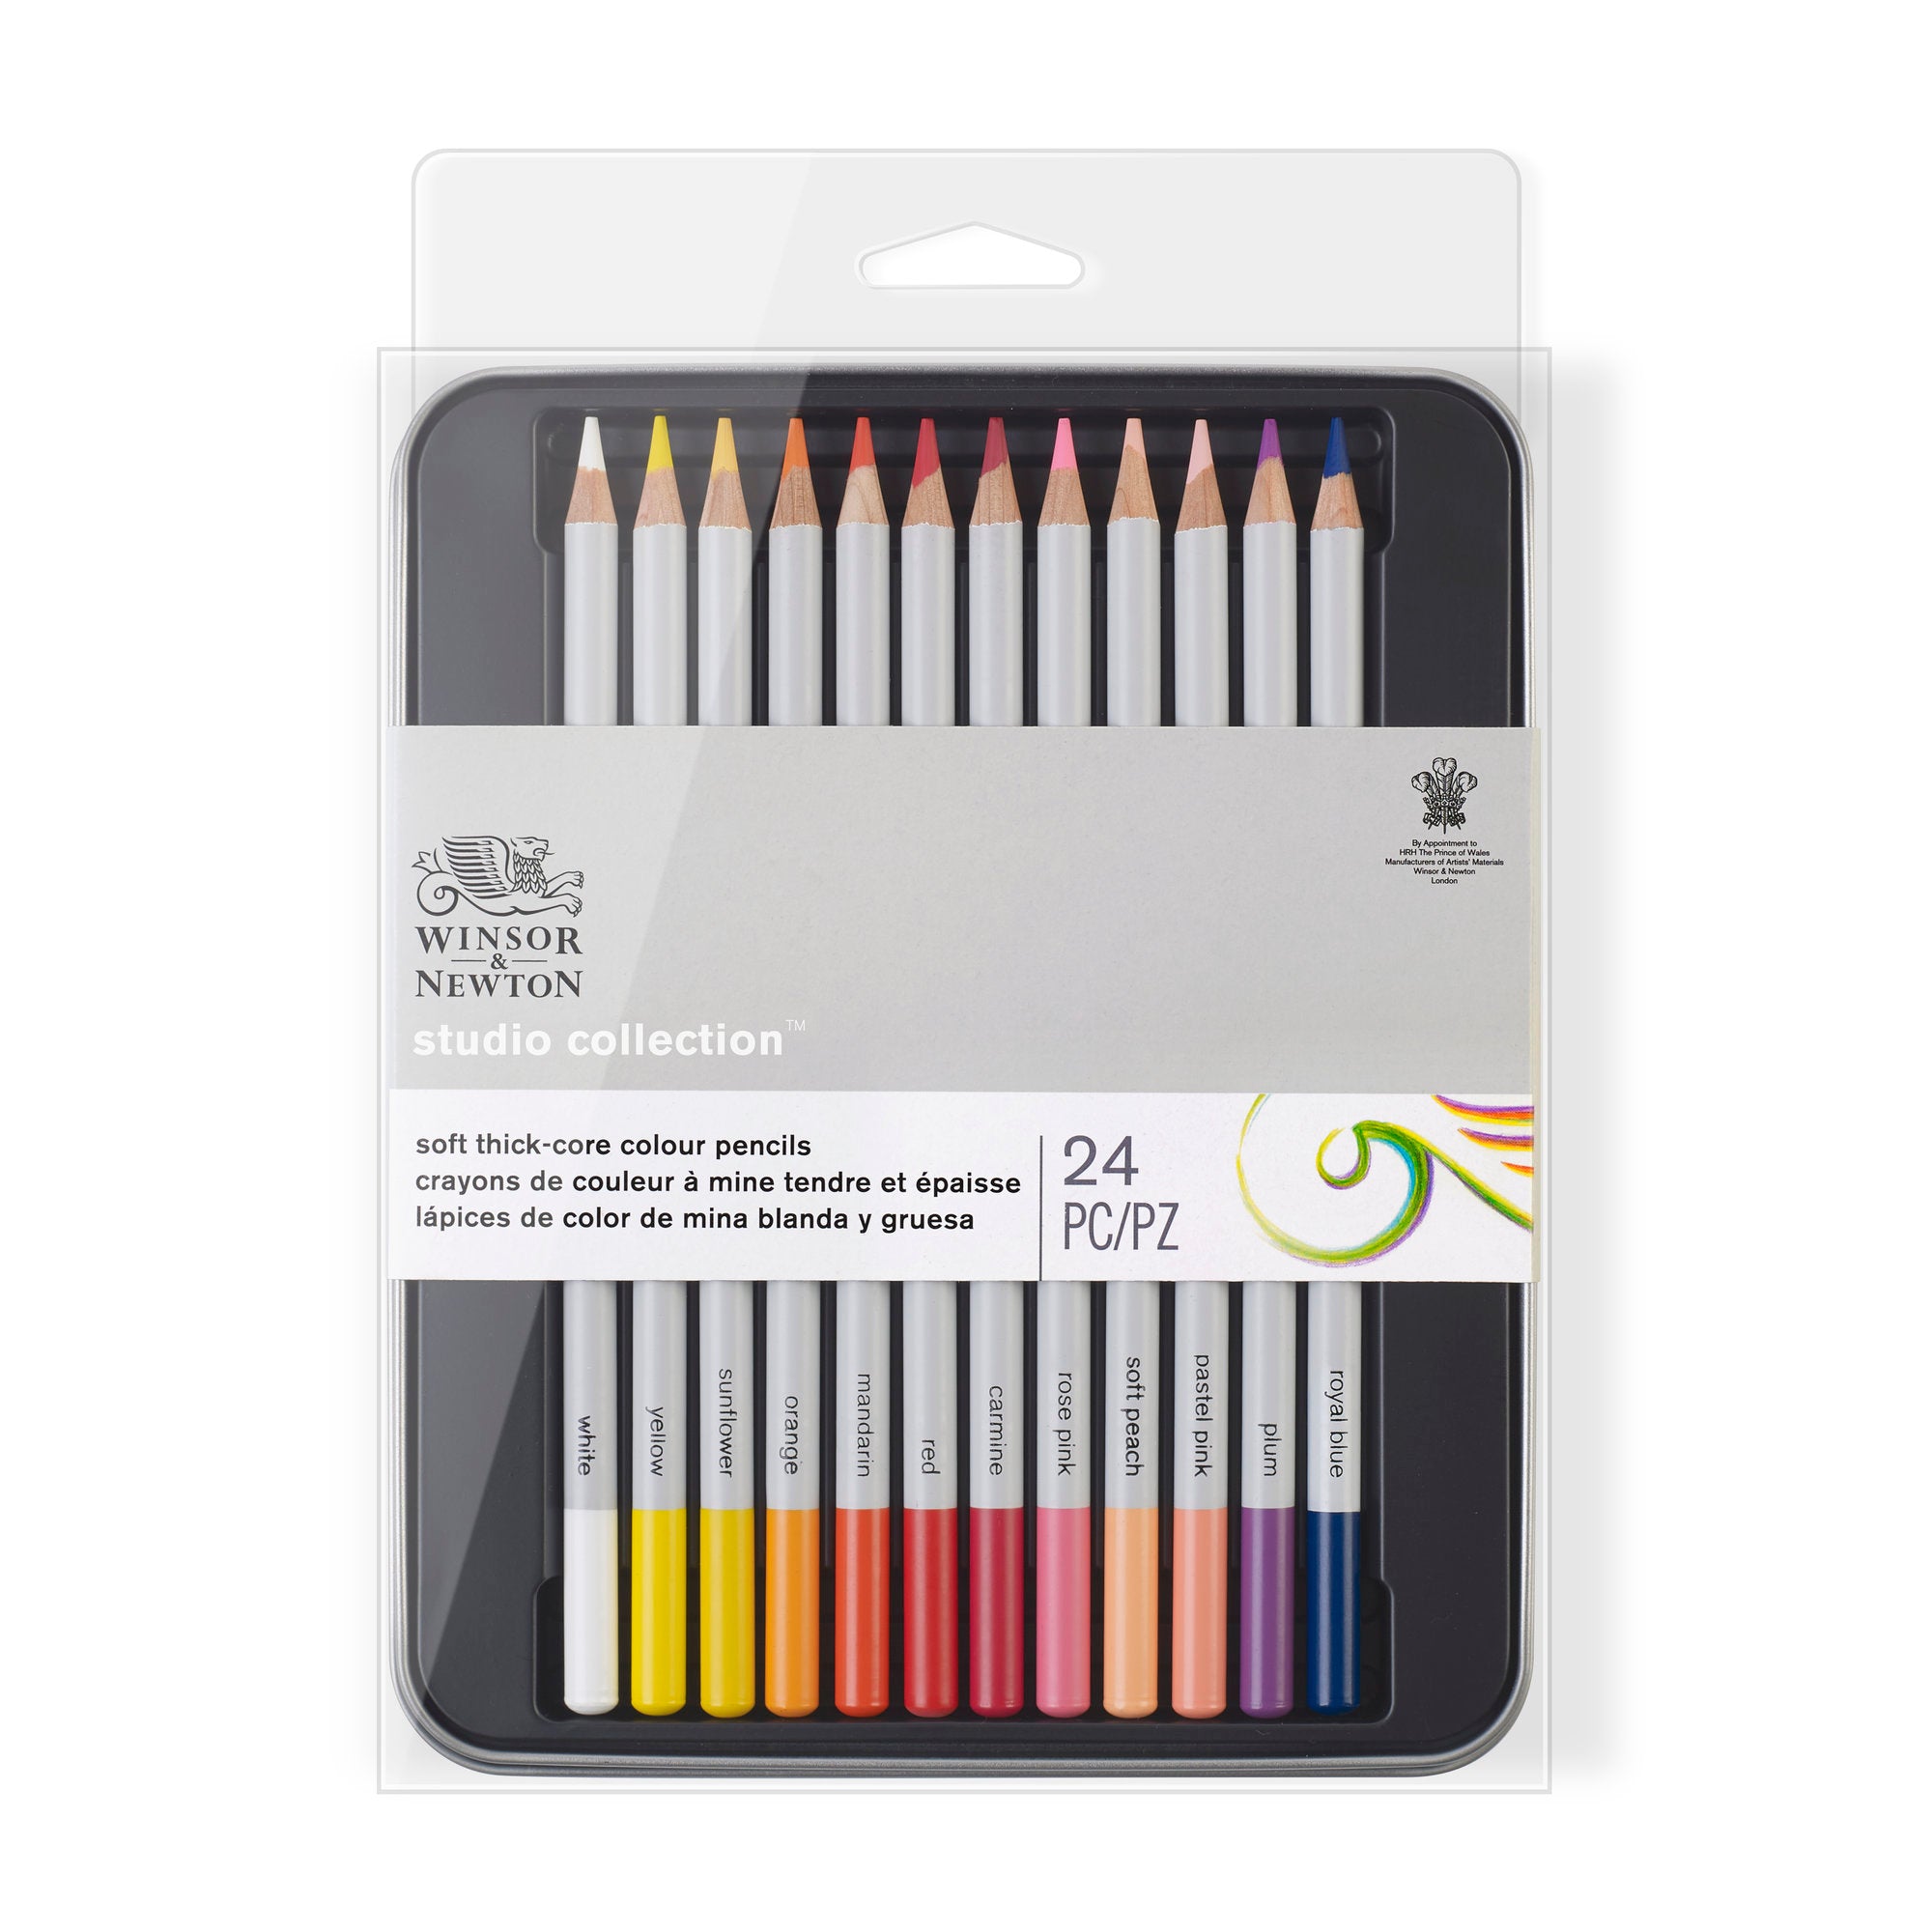 Winsor & Newton Studio Collection Soft thick-core colour pencils - Set of 24